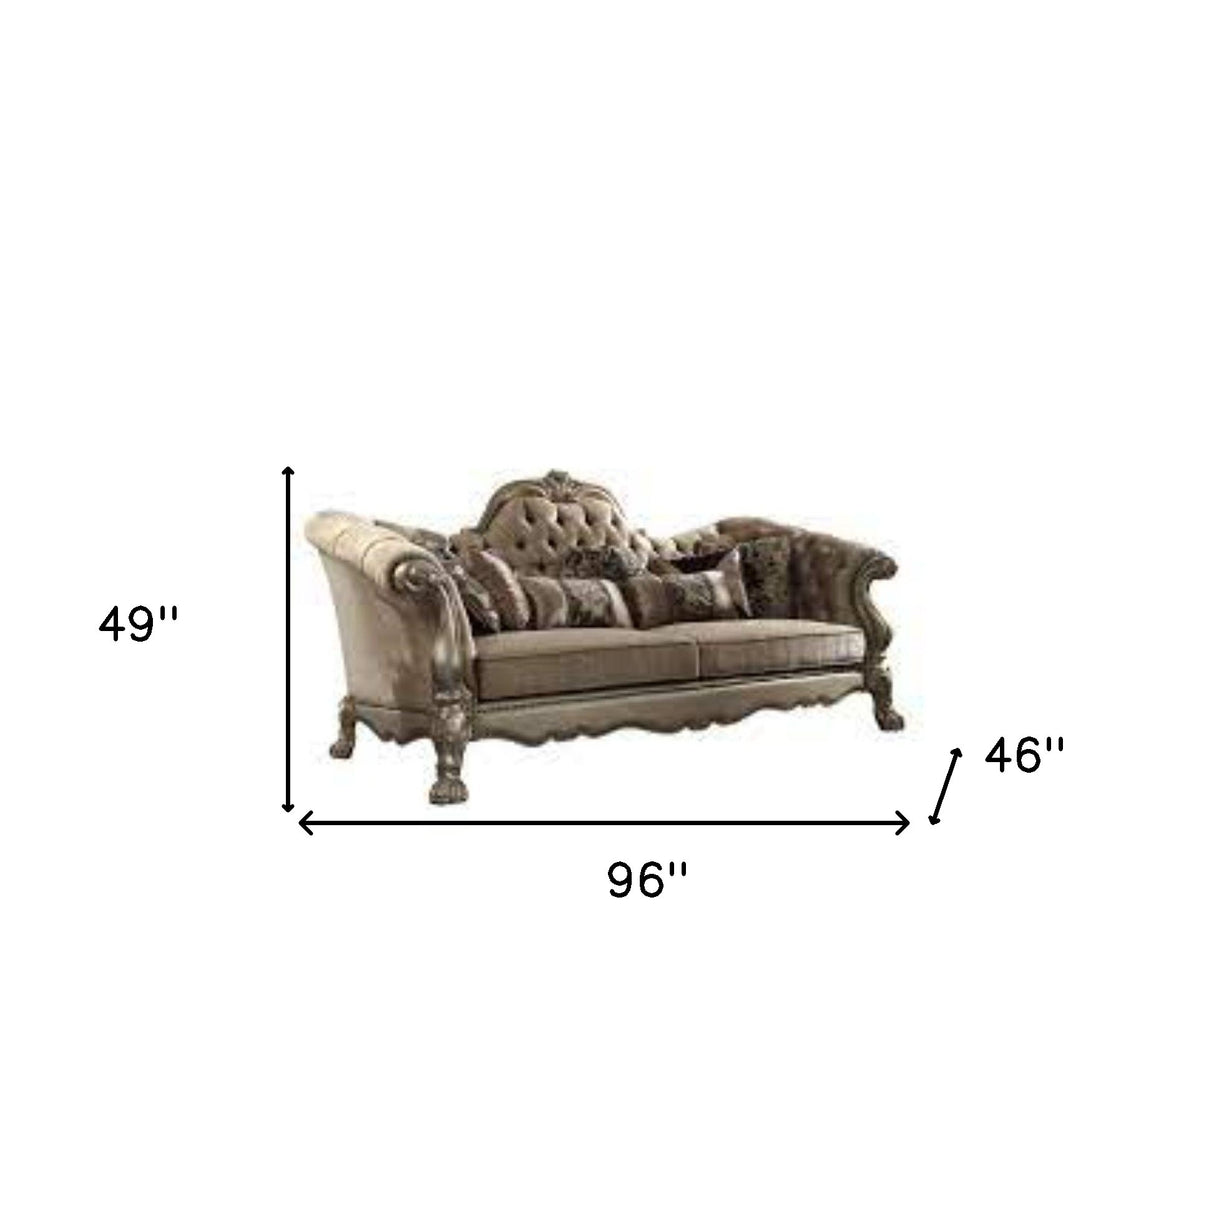 96" Bone Velvet Sofa And Toss Pillows With Gold Legs